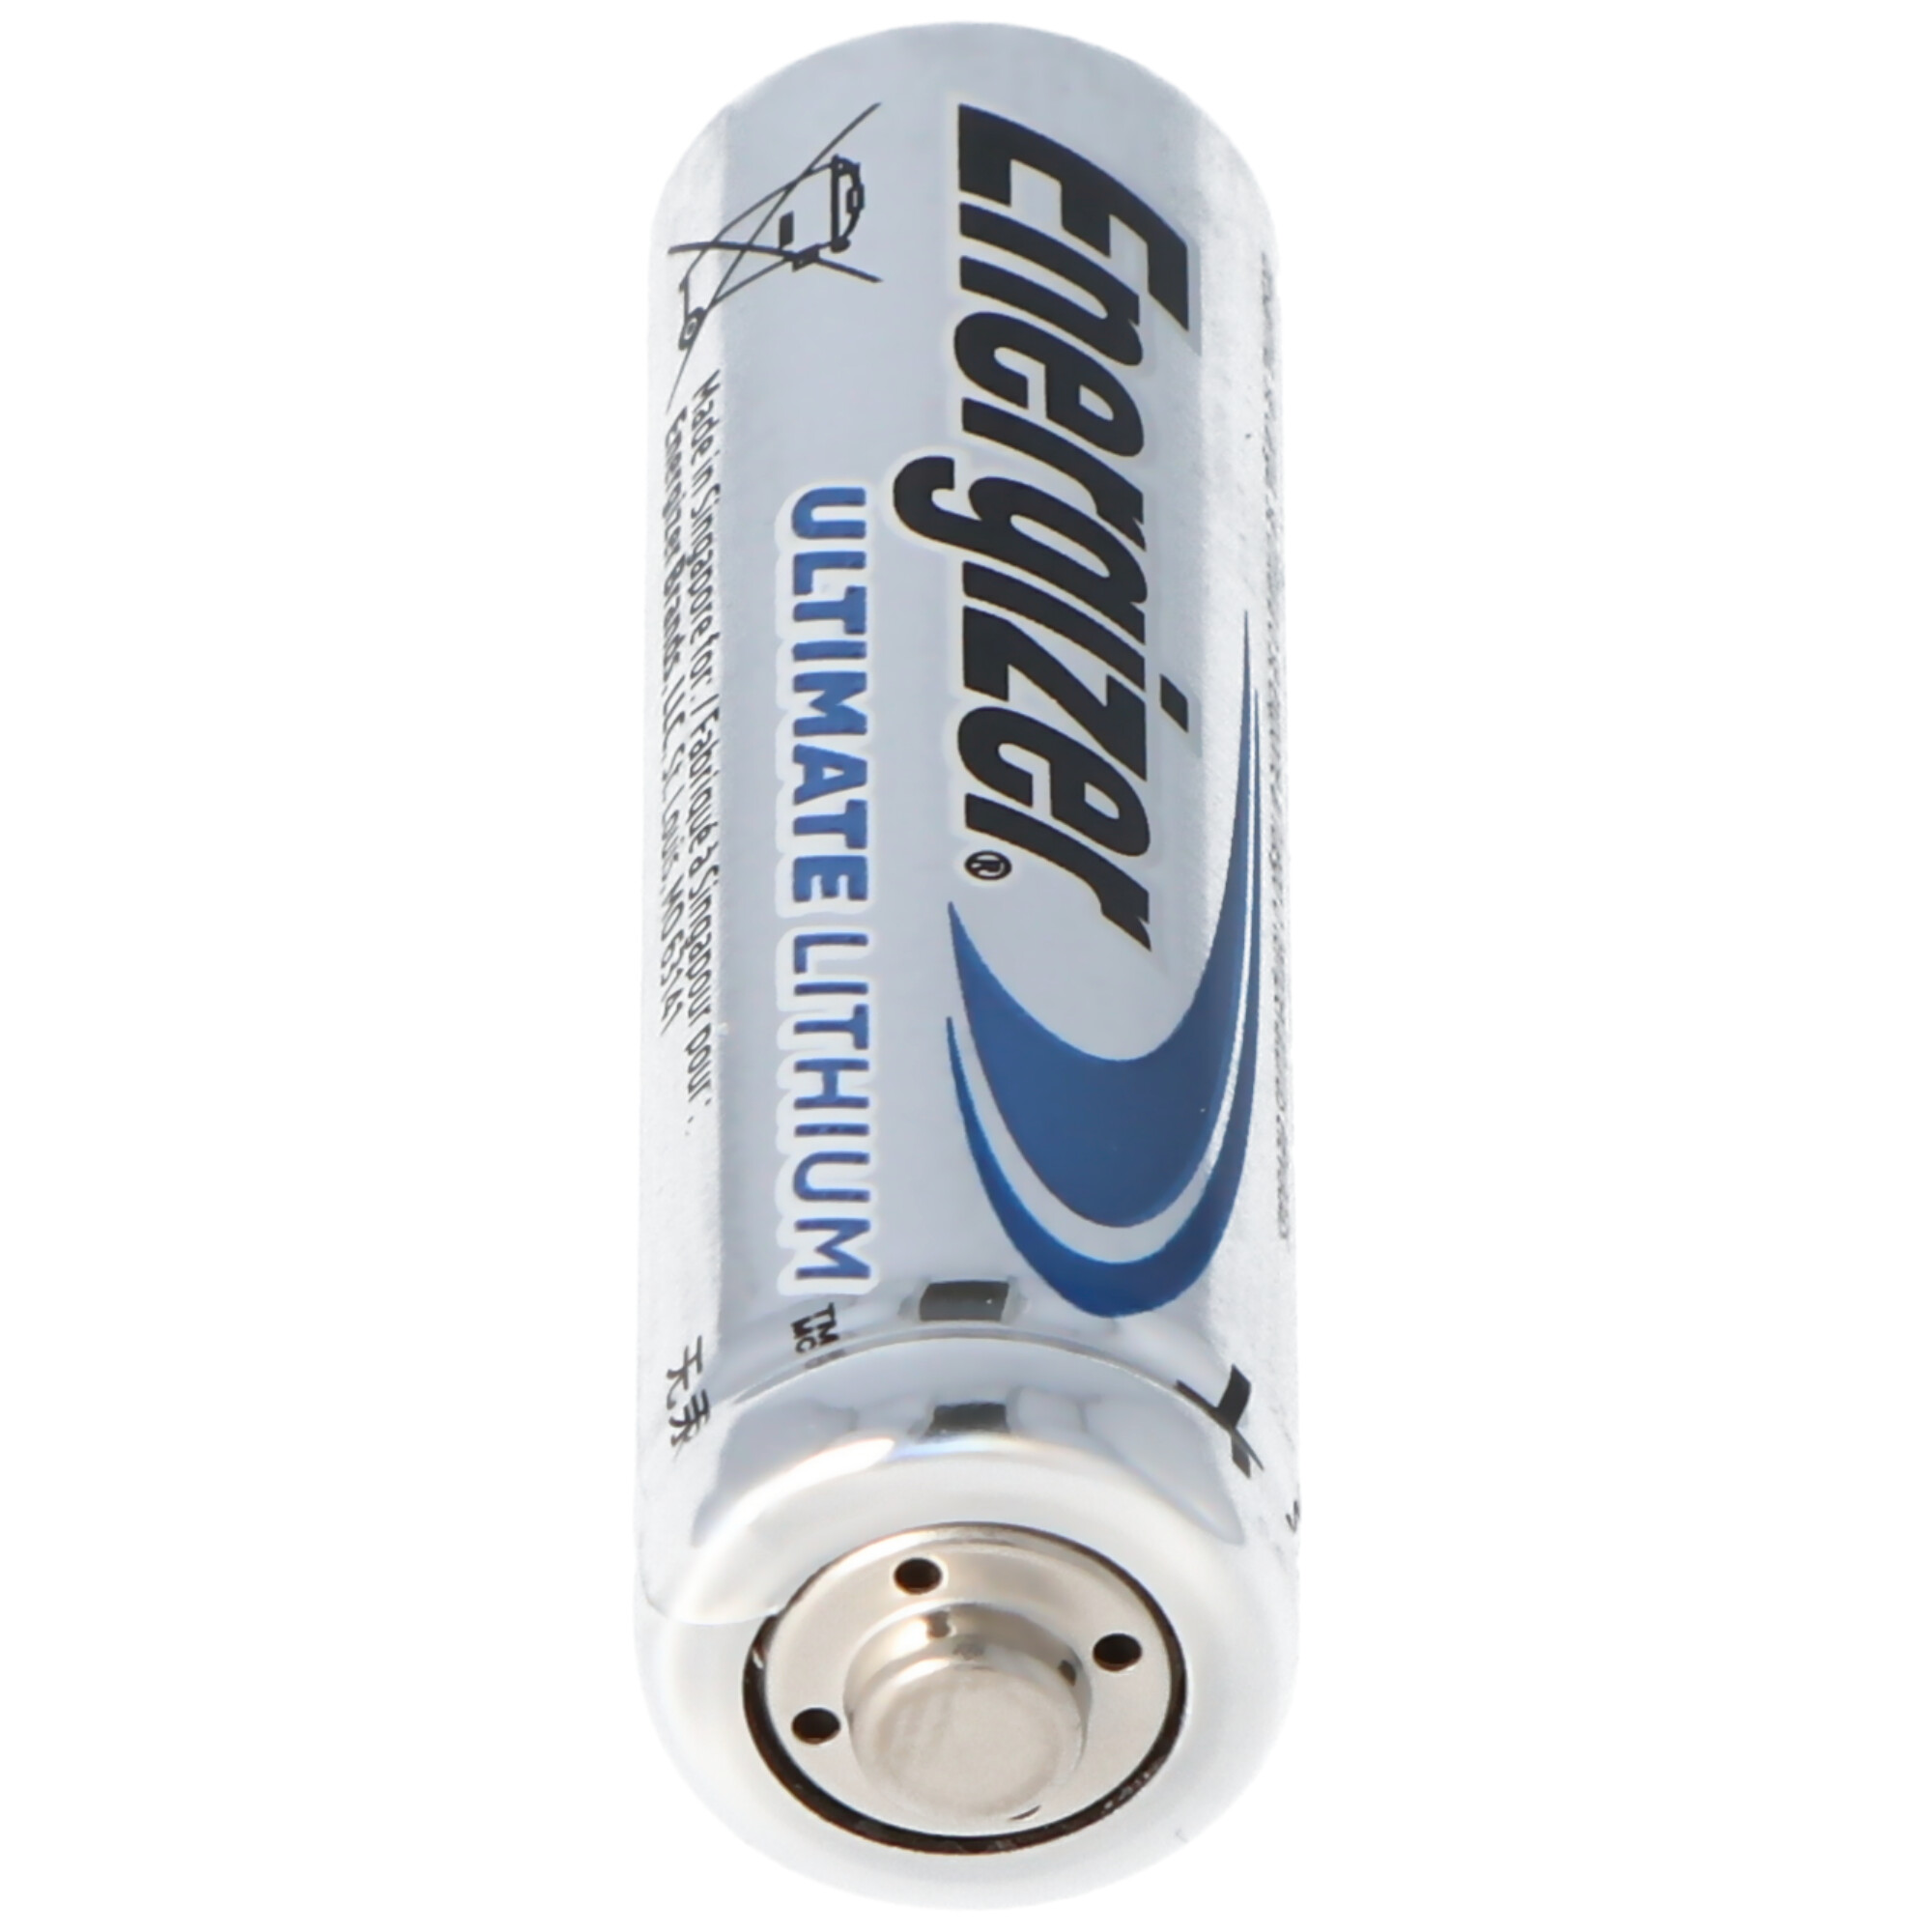 Energizer Ultimate Lithium Batterie 10er Box Energizer AA Batterie 1,5 Volt Batterie Energizer Ultimate Lithium AA 3100mAh